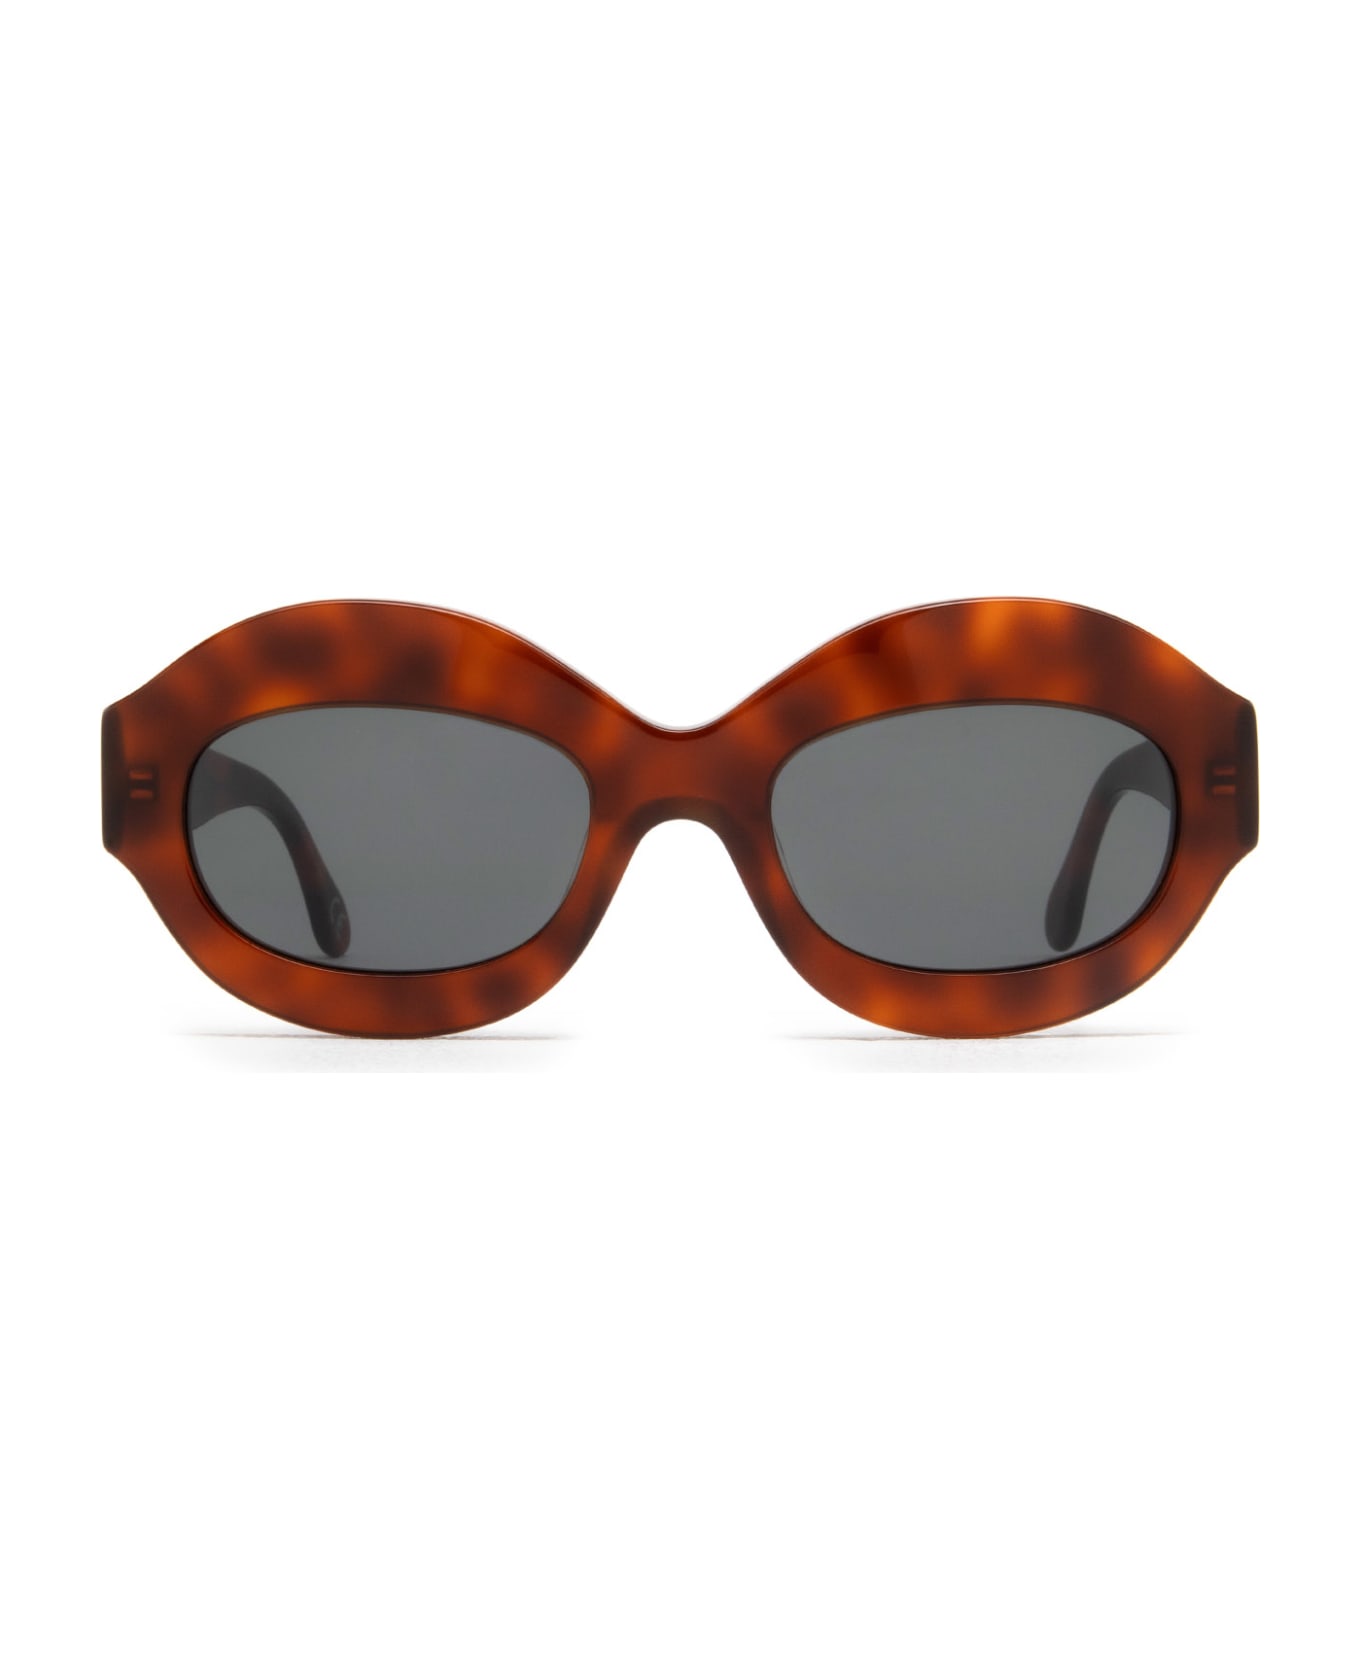 Marni Eyewear Ik Kil Cenote Havana Diversa Sunglasses - Havana Diversa